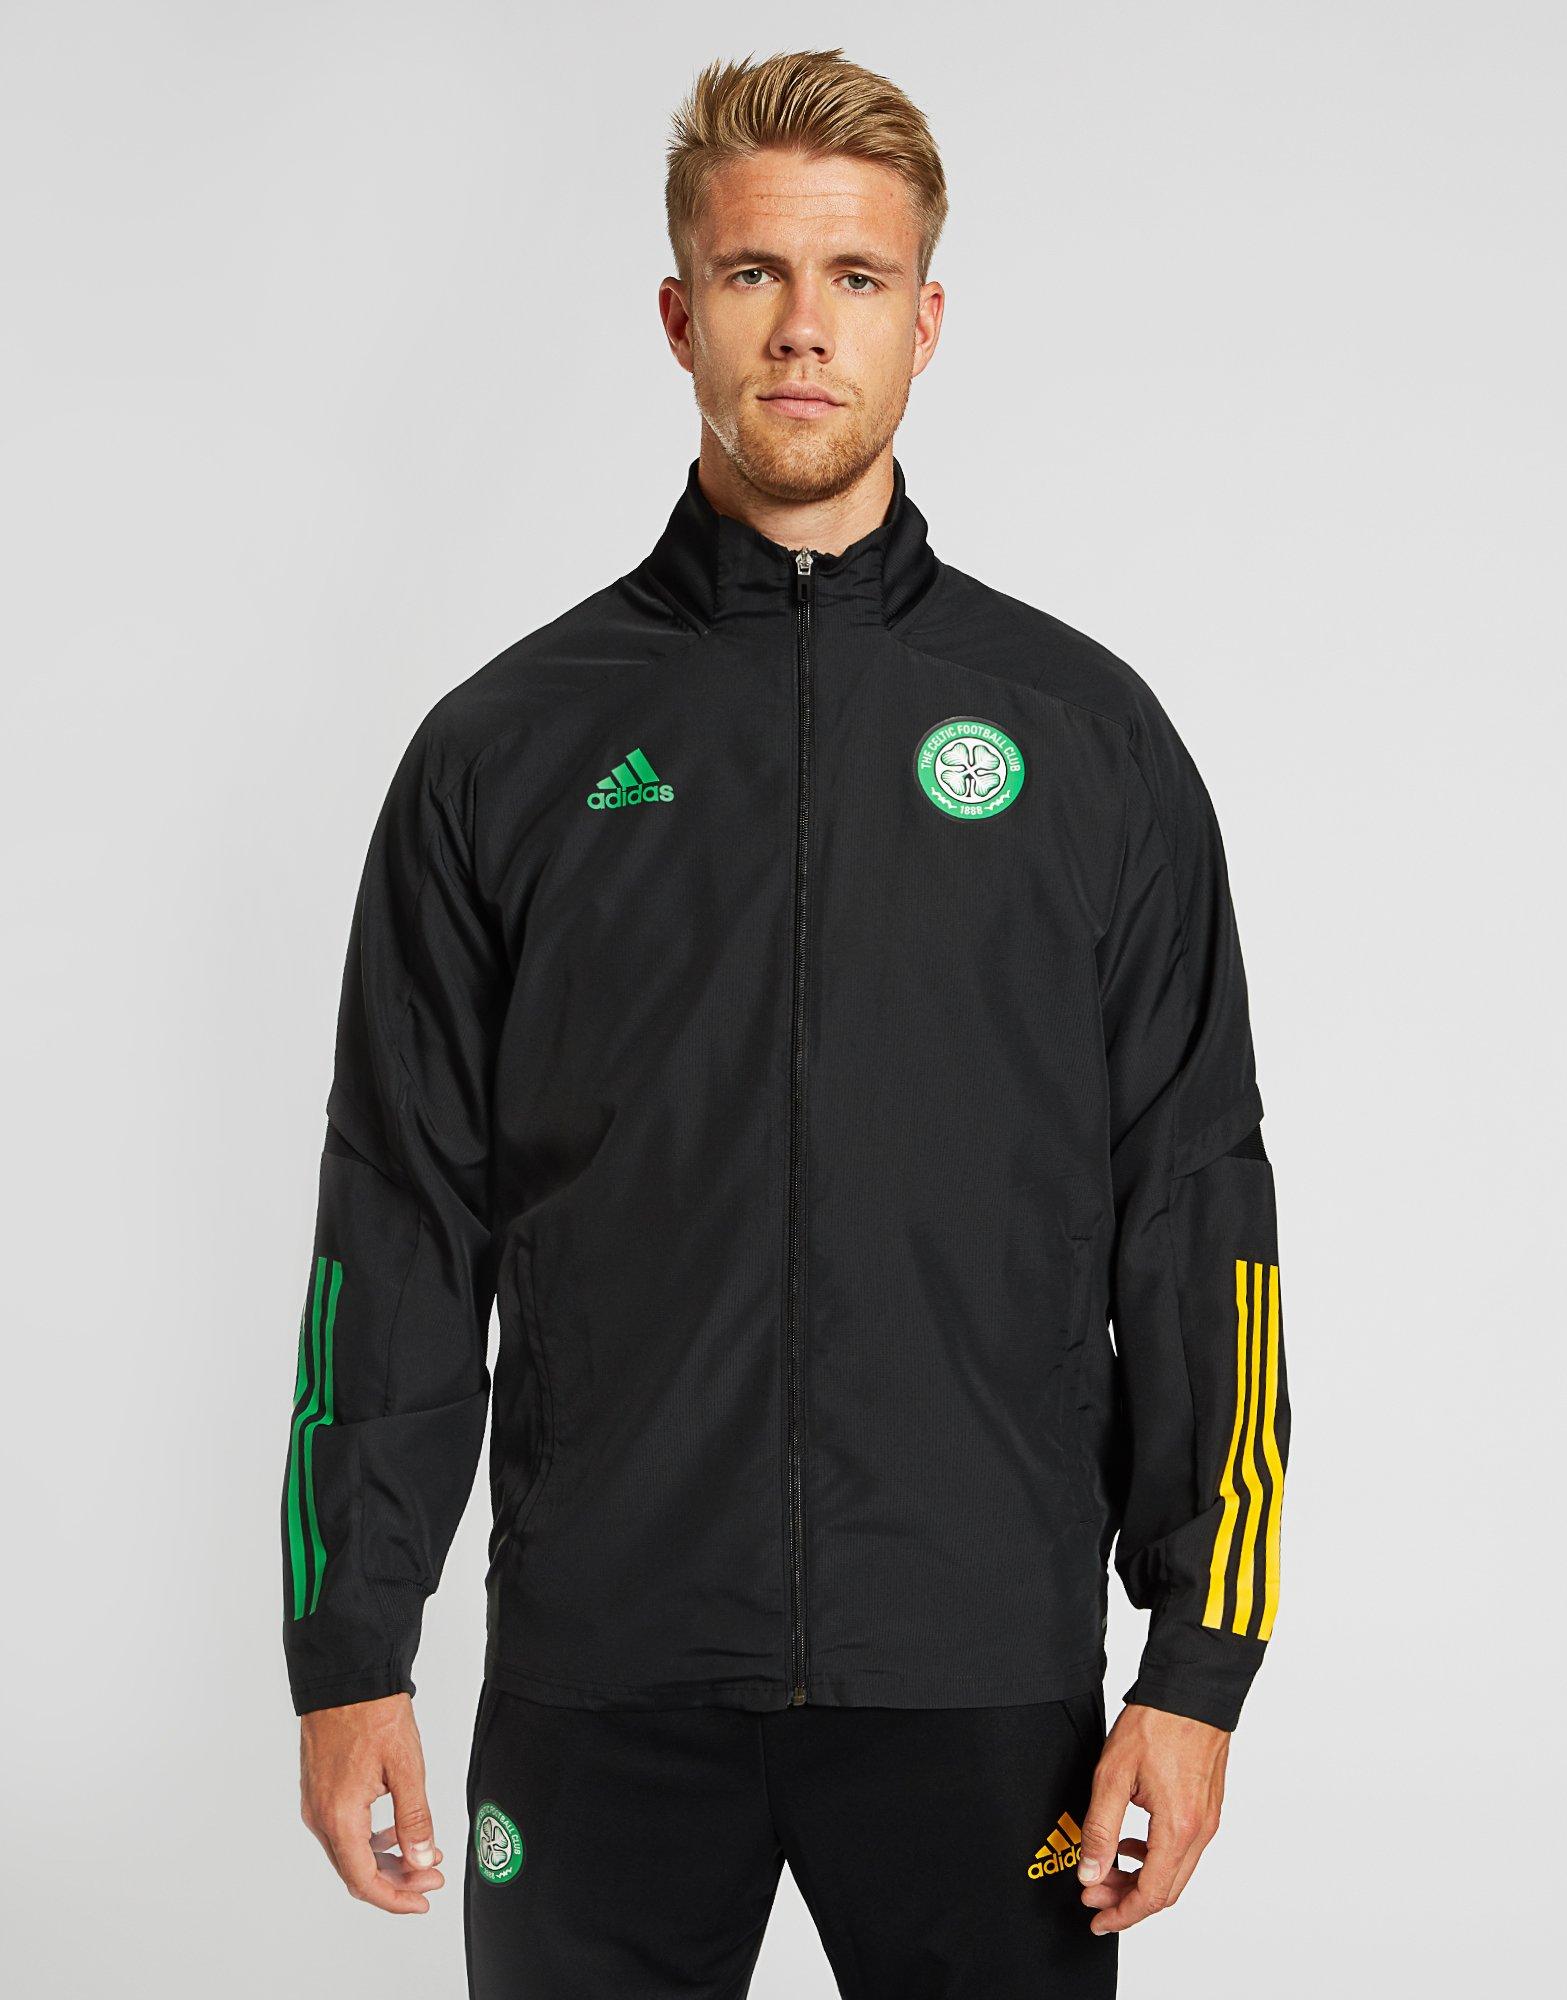 celtic jacket adidas